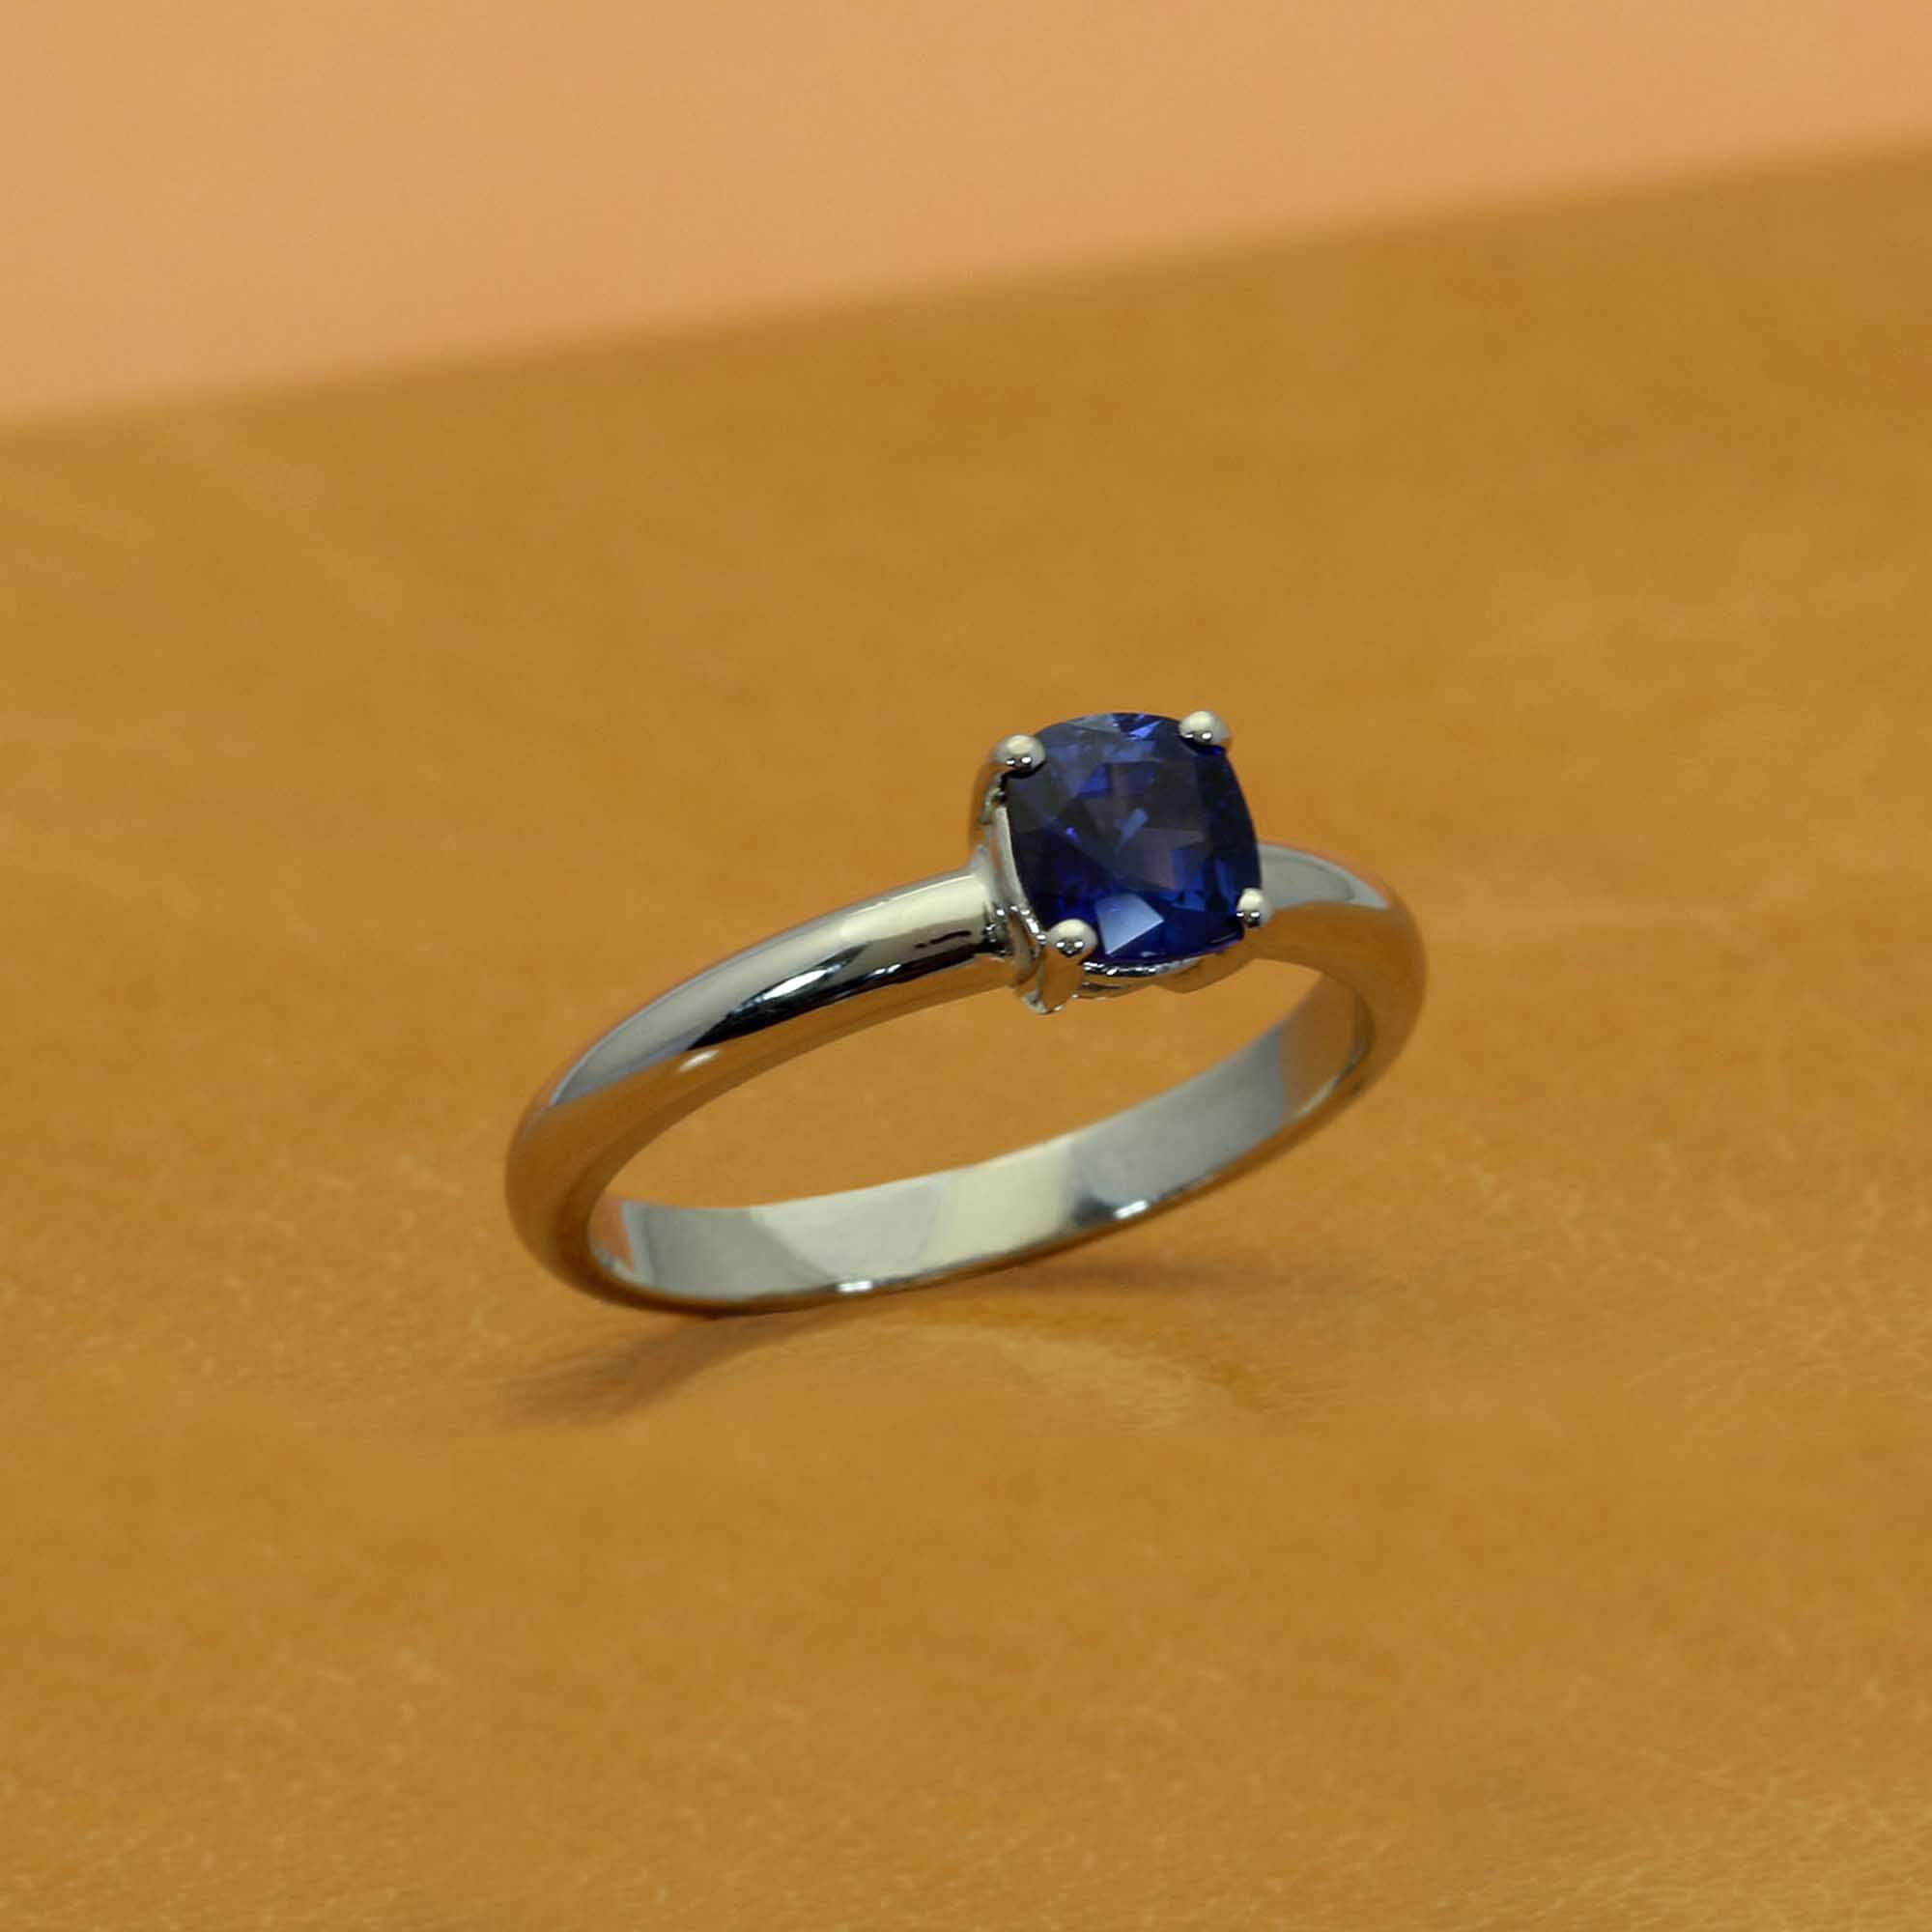 Alternative engagement ring in palladium with blue sapphire